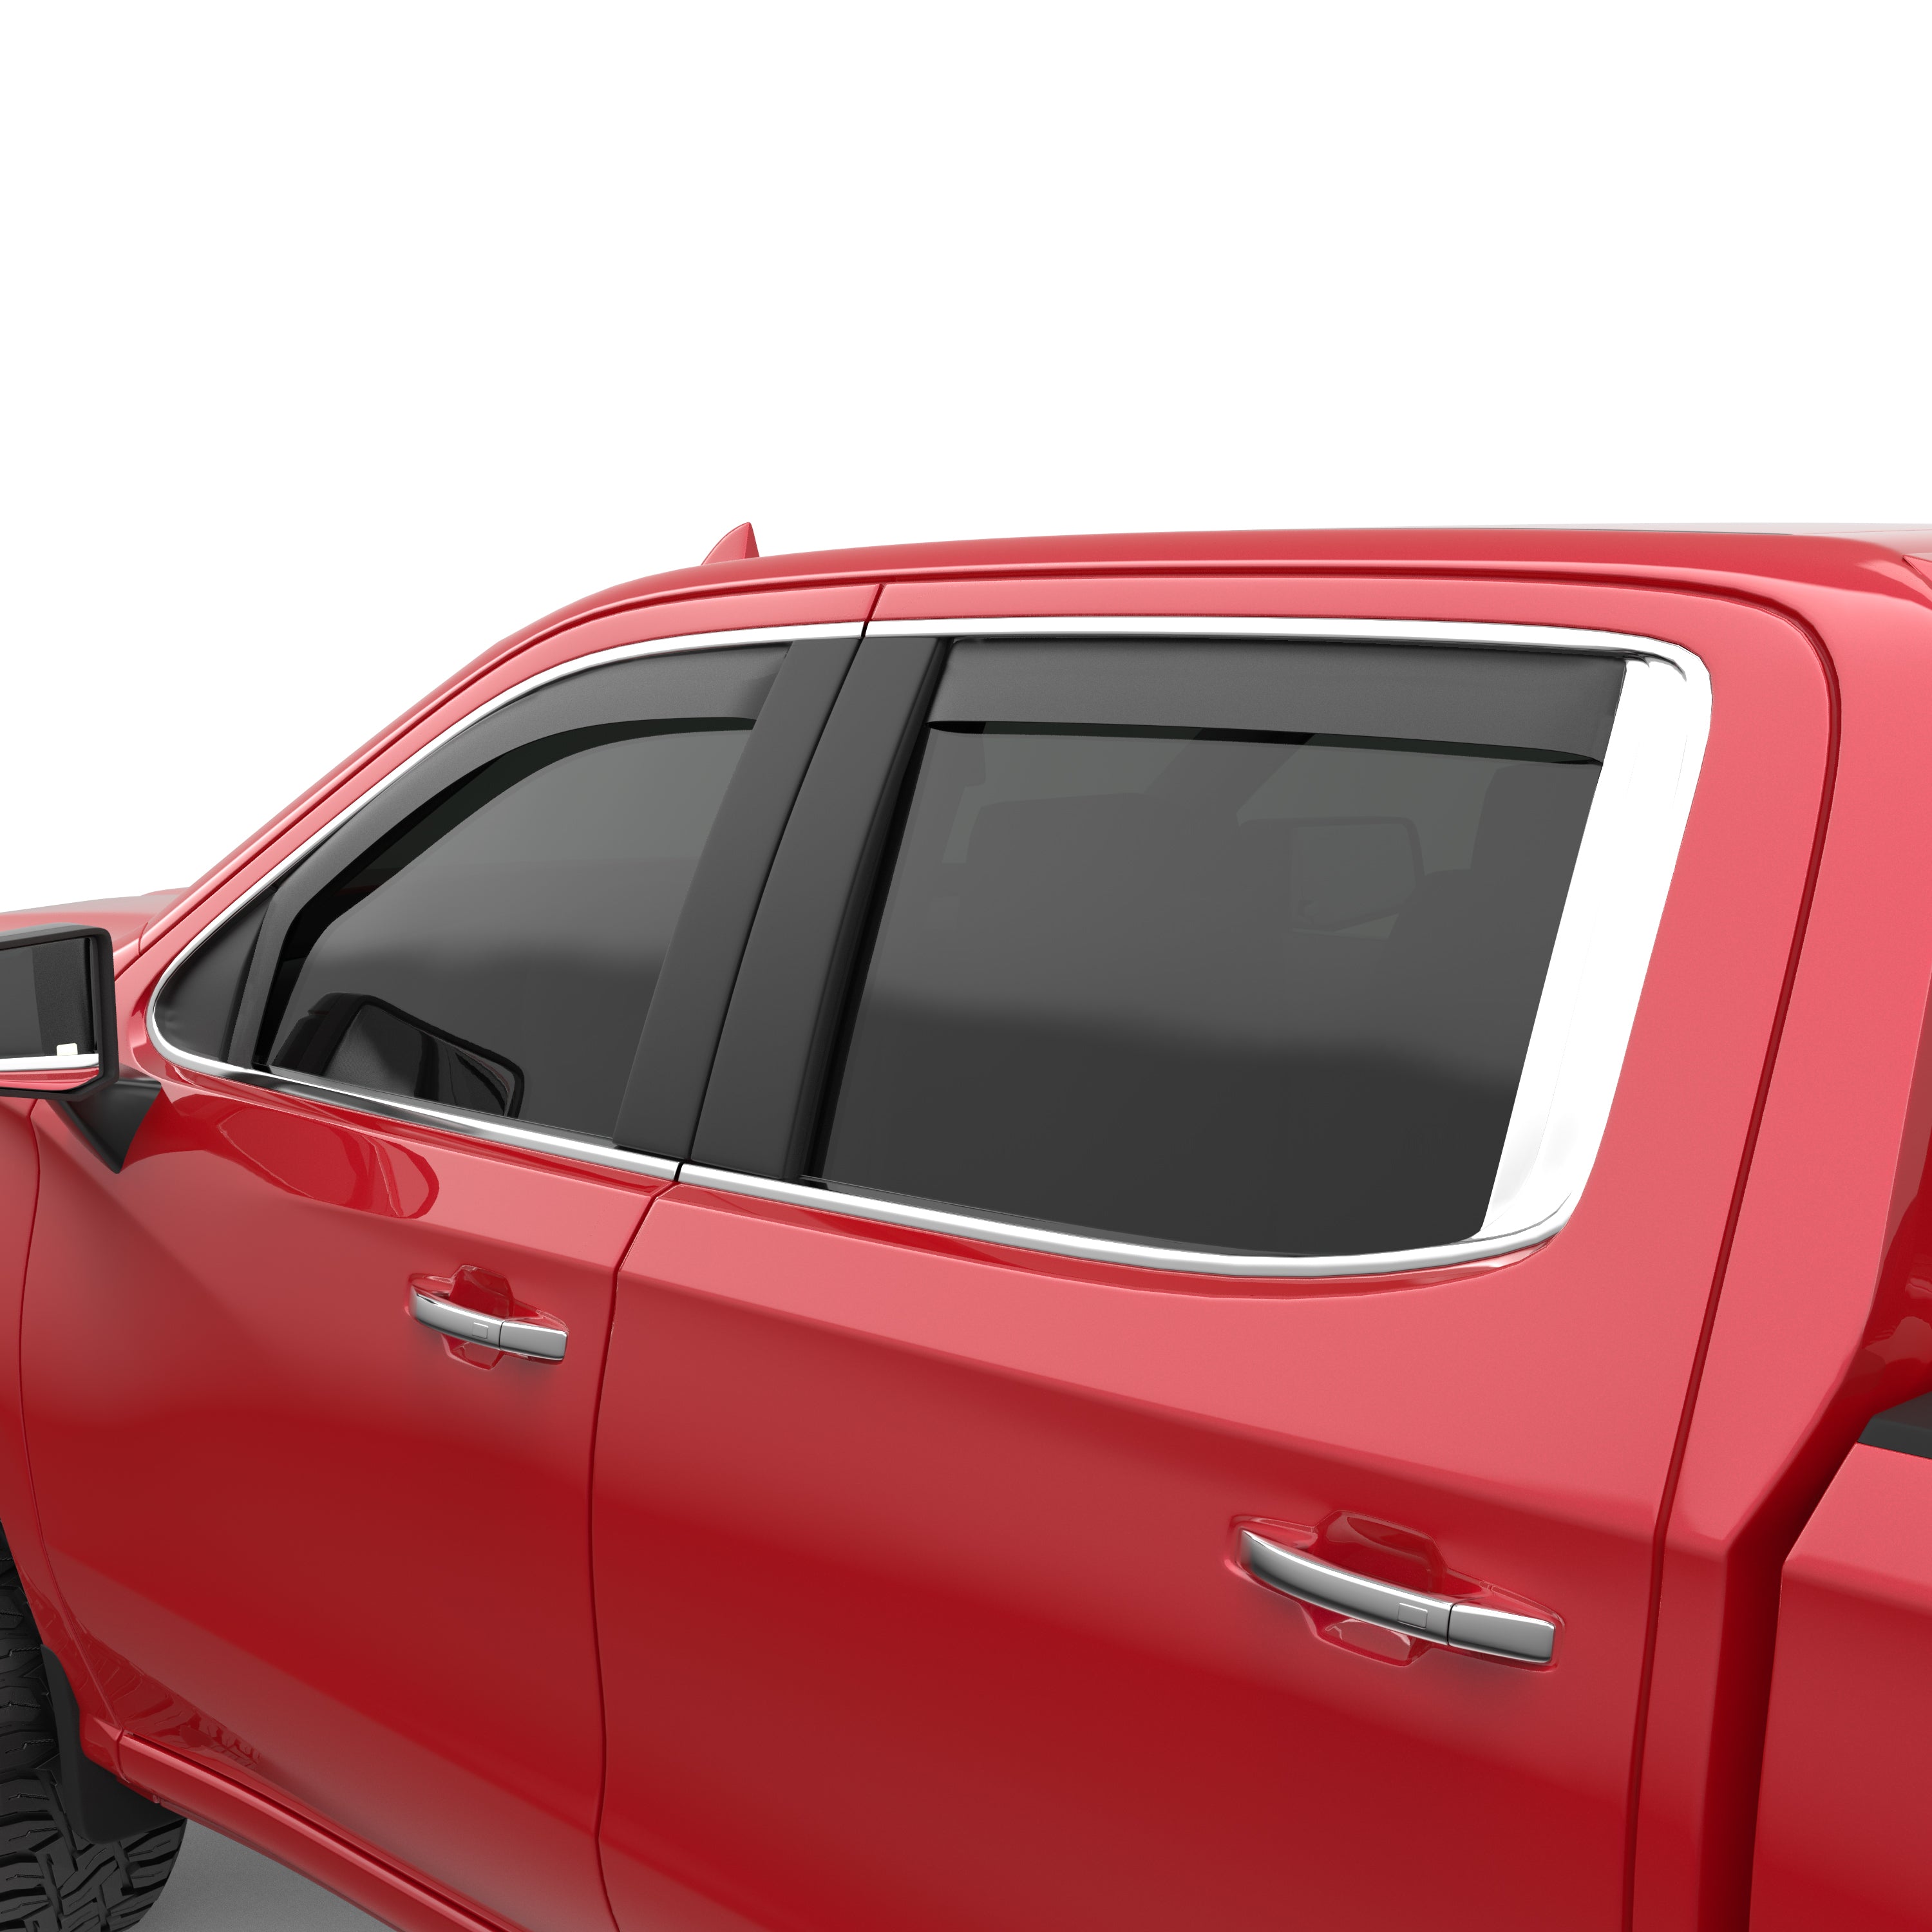 EGR in-channel window visors front & rear set matte black Extended Cab 19-22 Chevrolet Silverado & GMC Sierra 1500